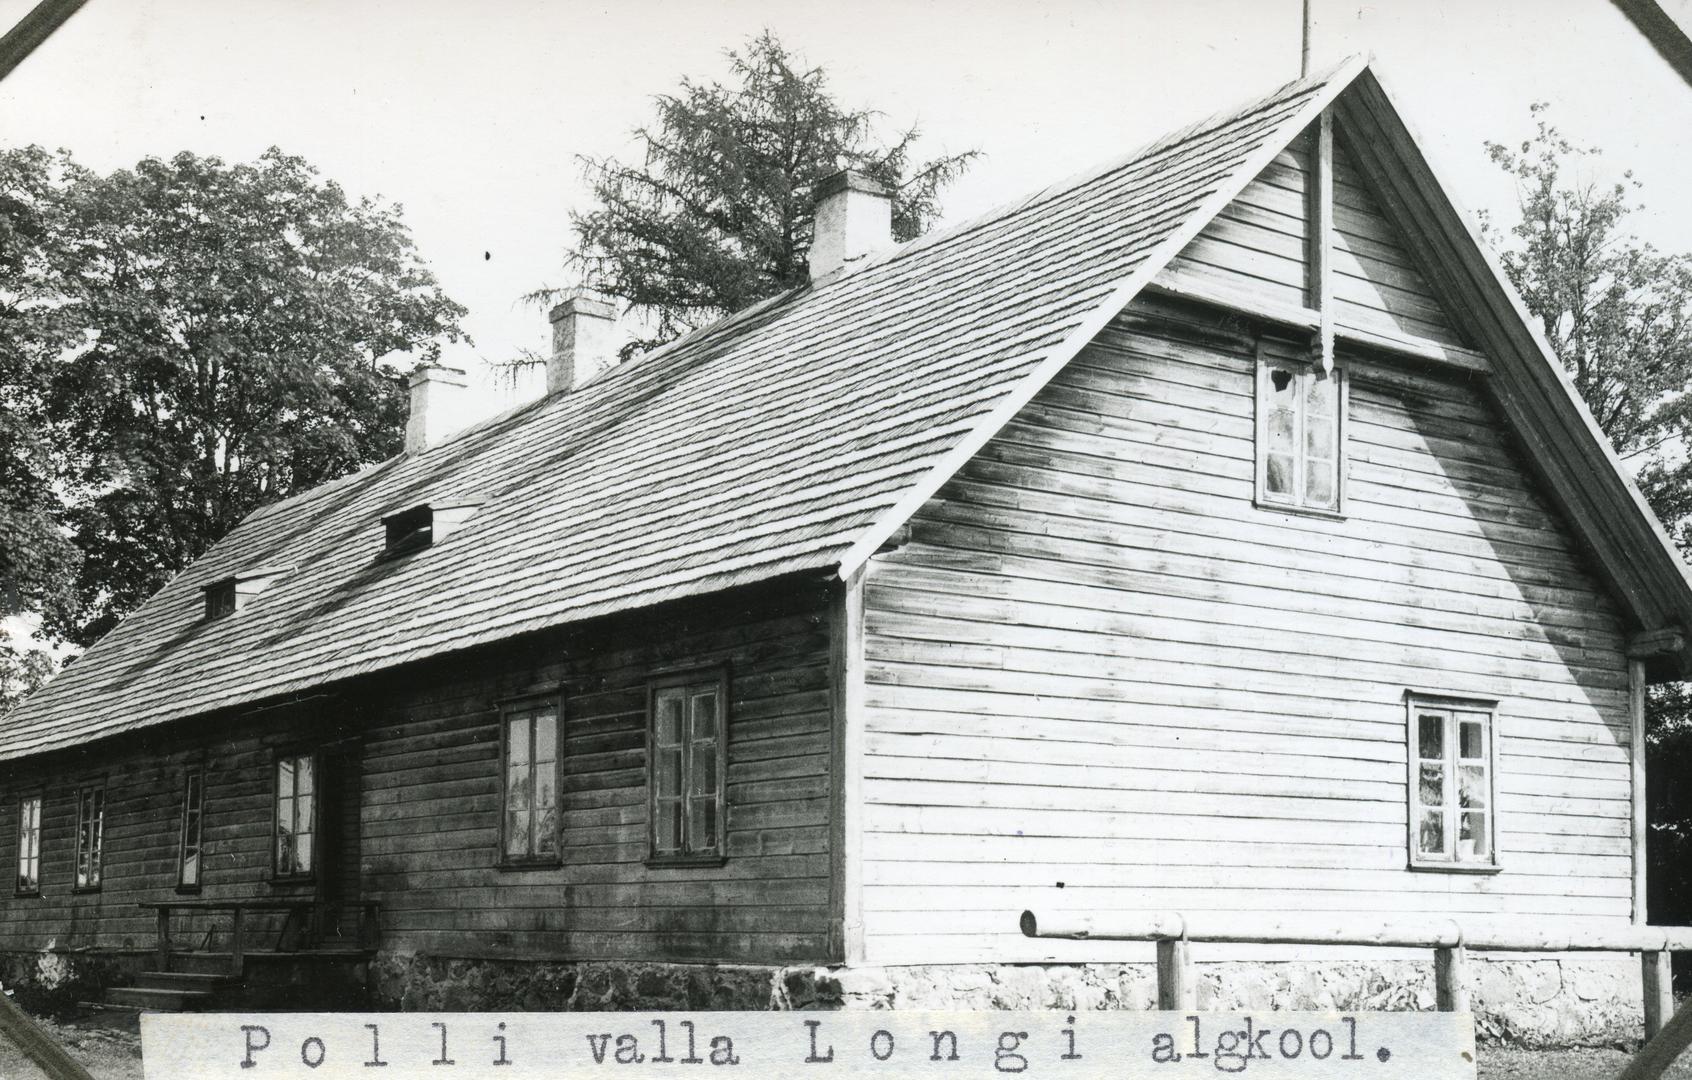 Polli municipality Longi Algkooli building